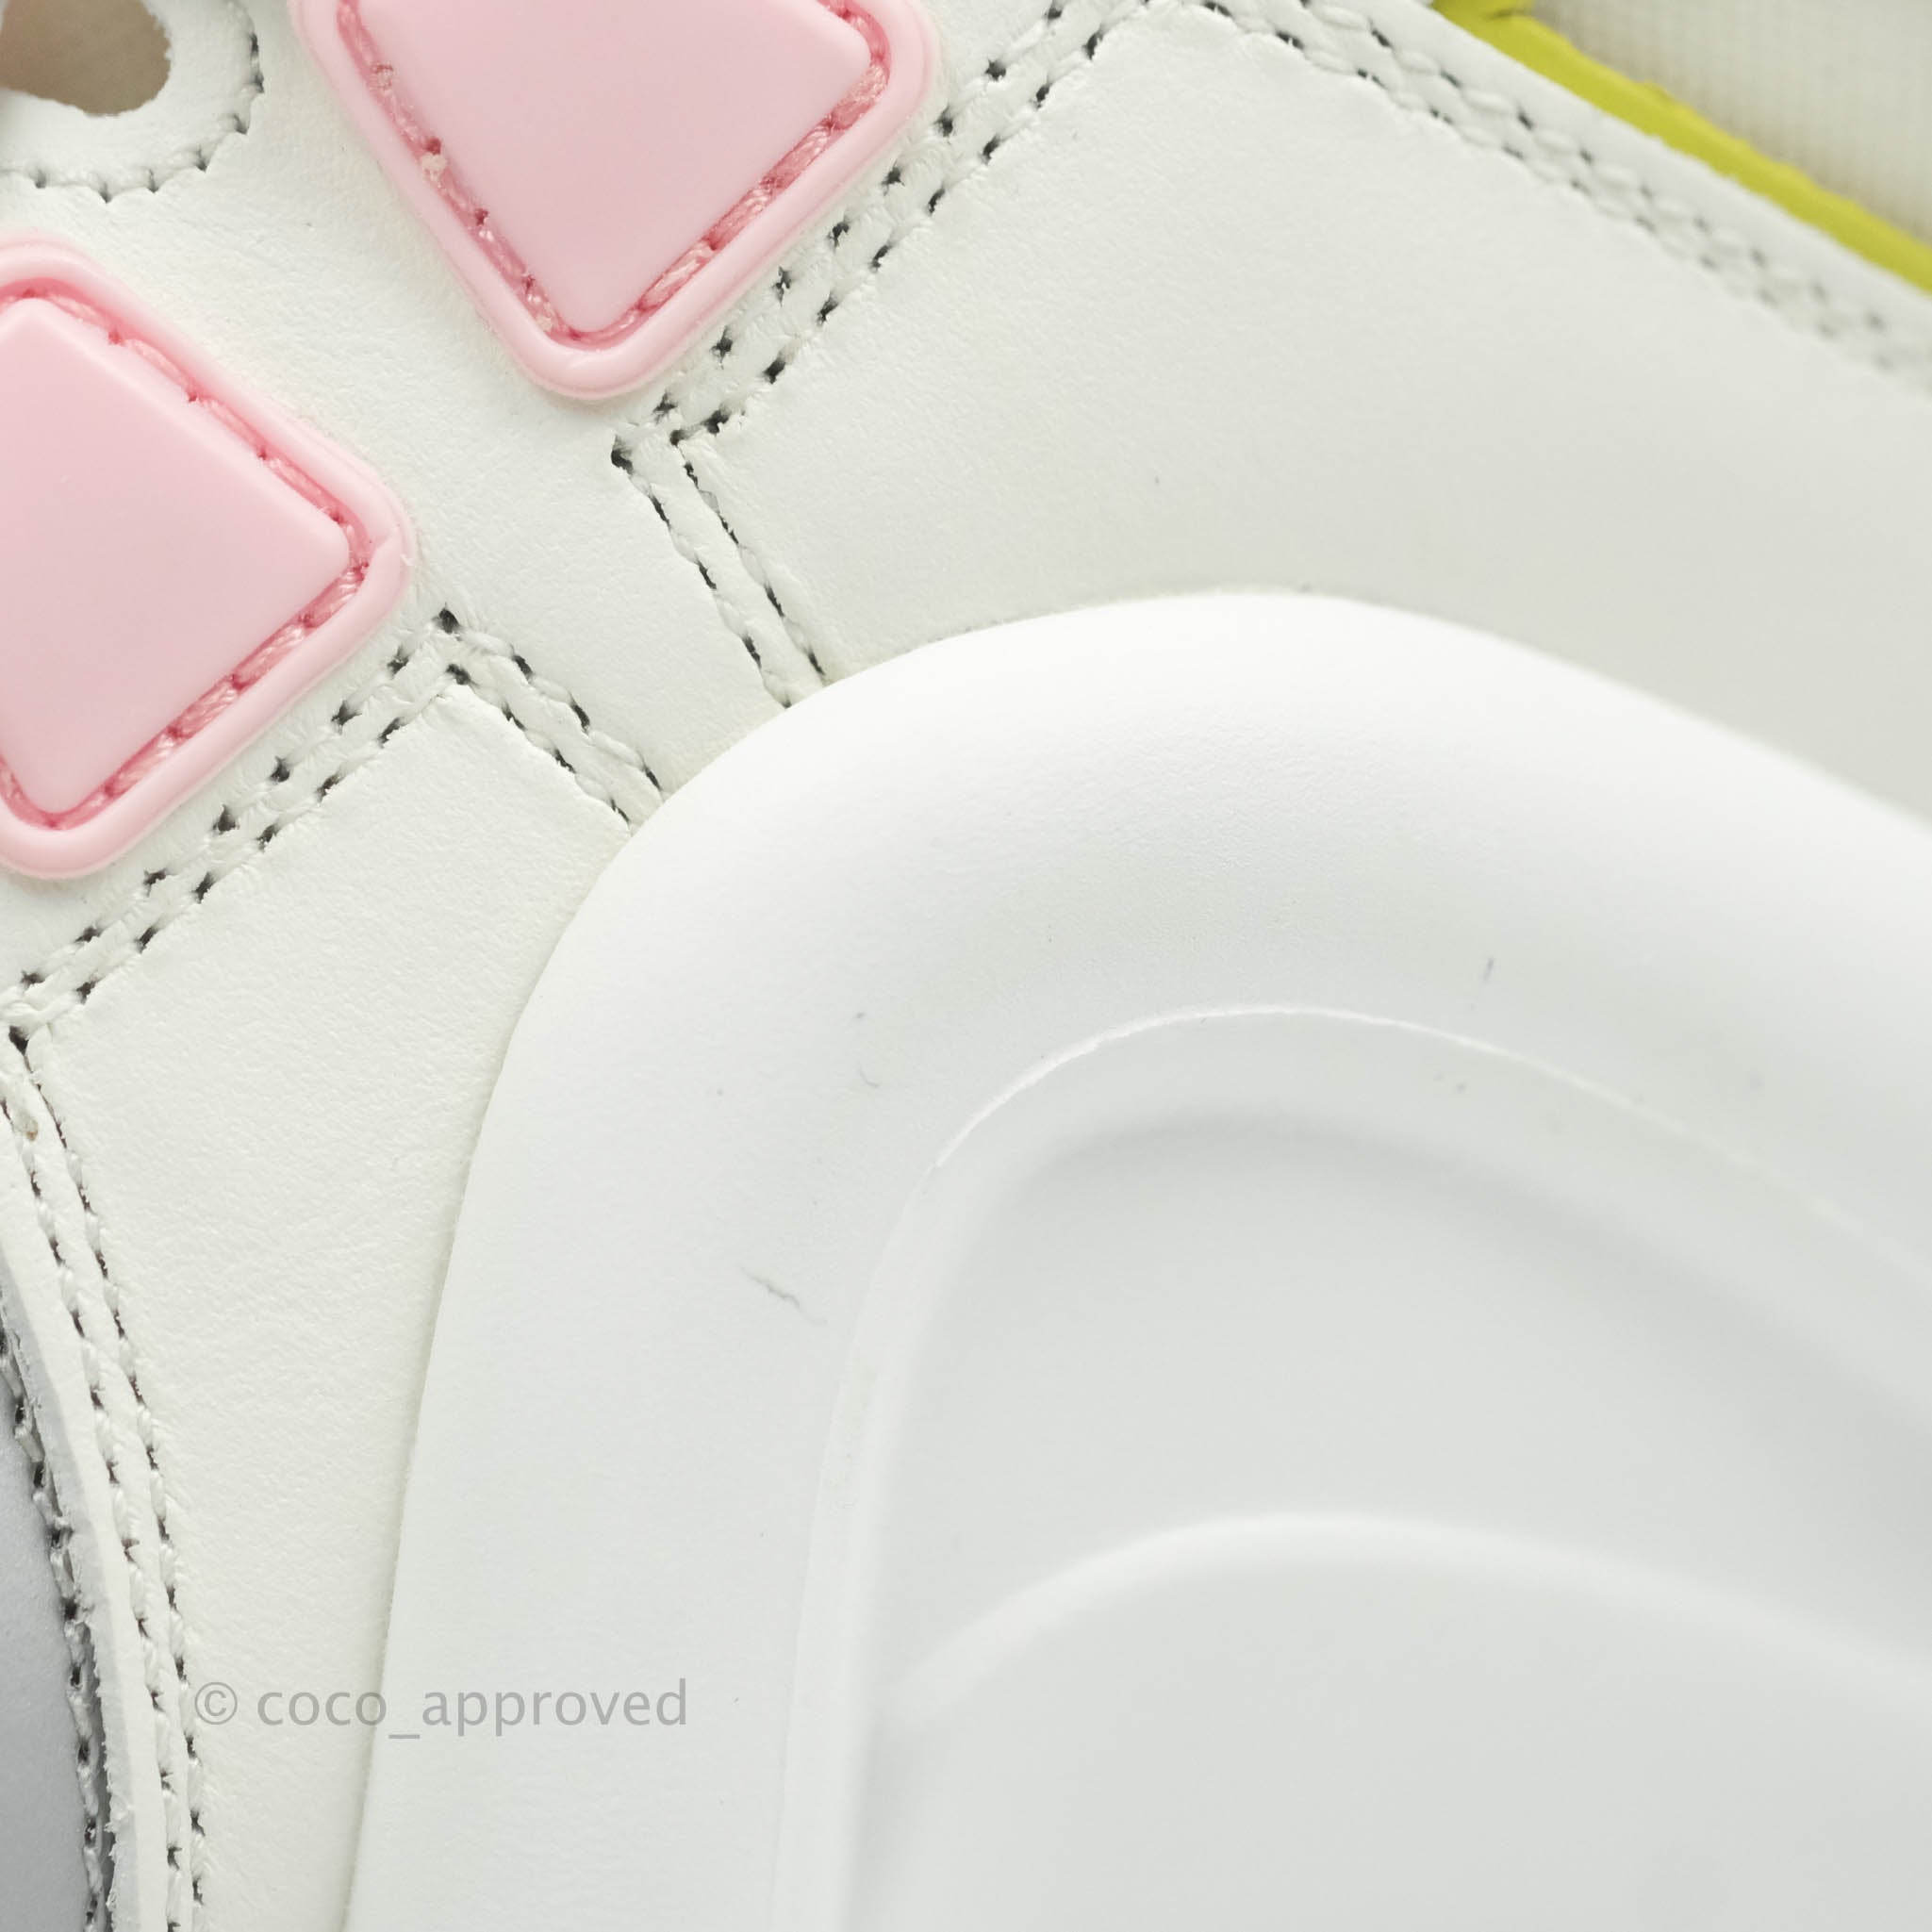 Louis Vuitton, Shoes, Louis Vuitton Archlight Sneakers Rose Clair Pink  White Size 3985